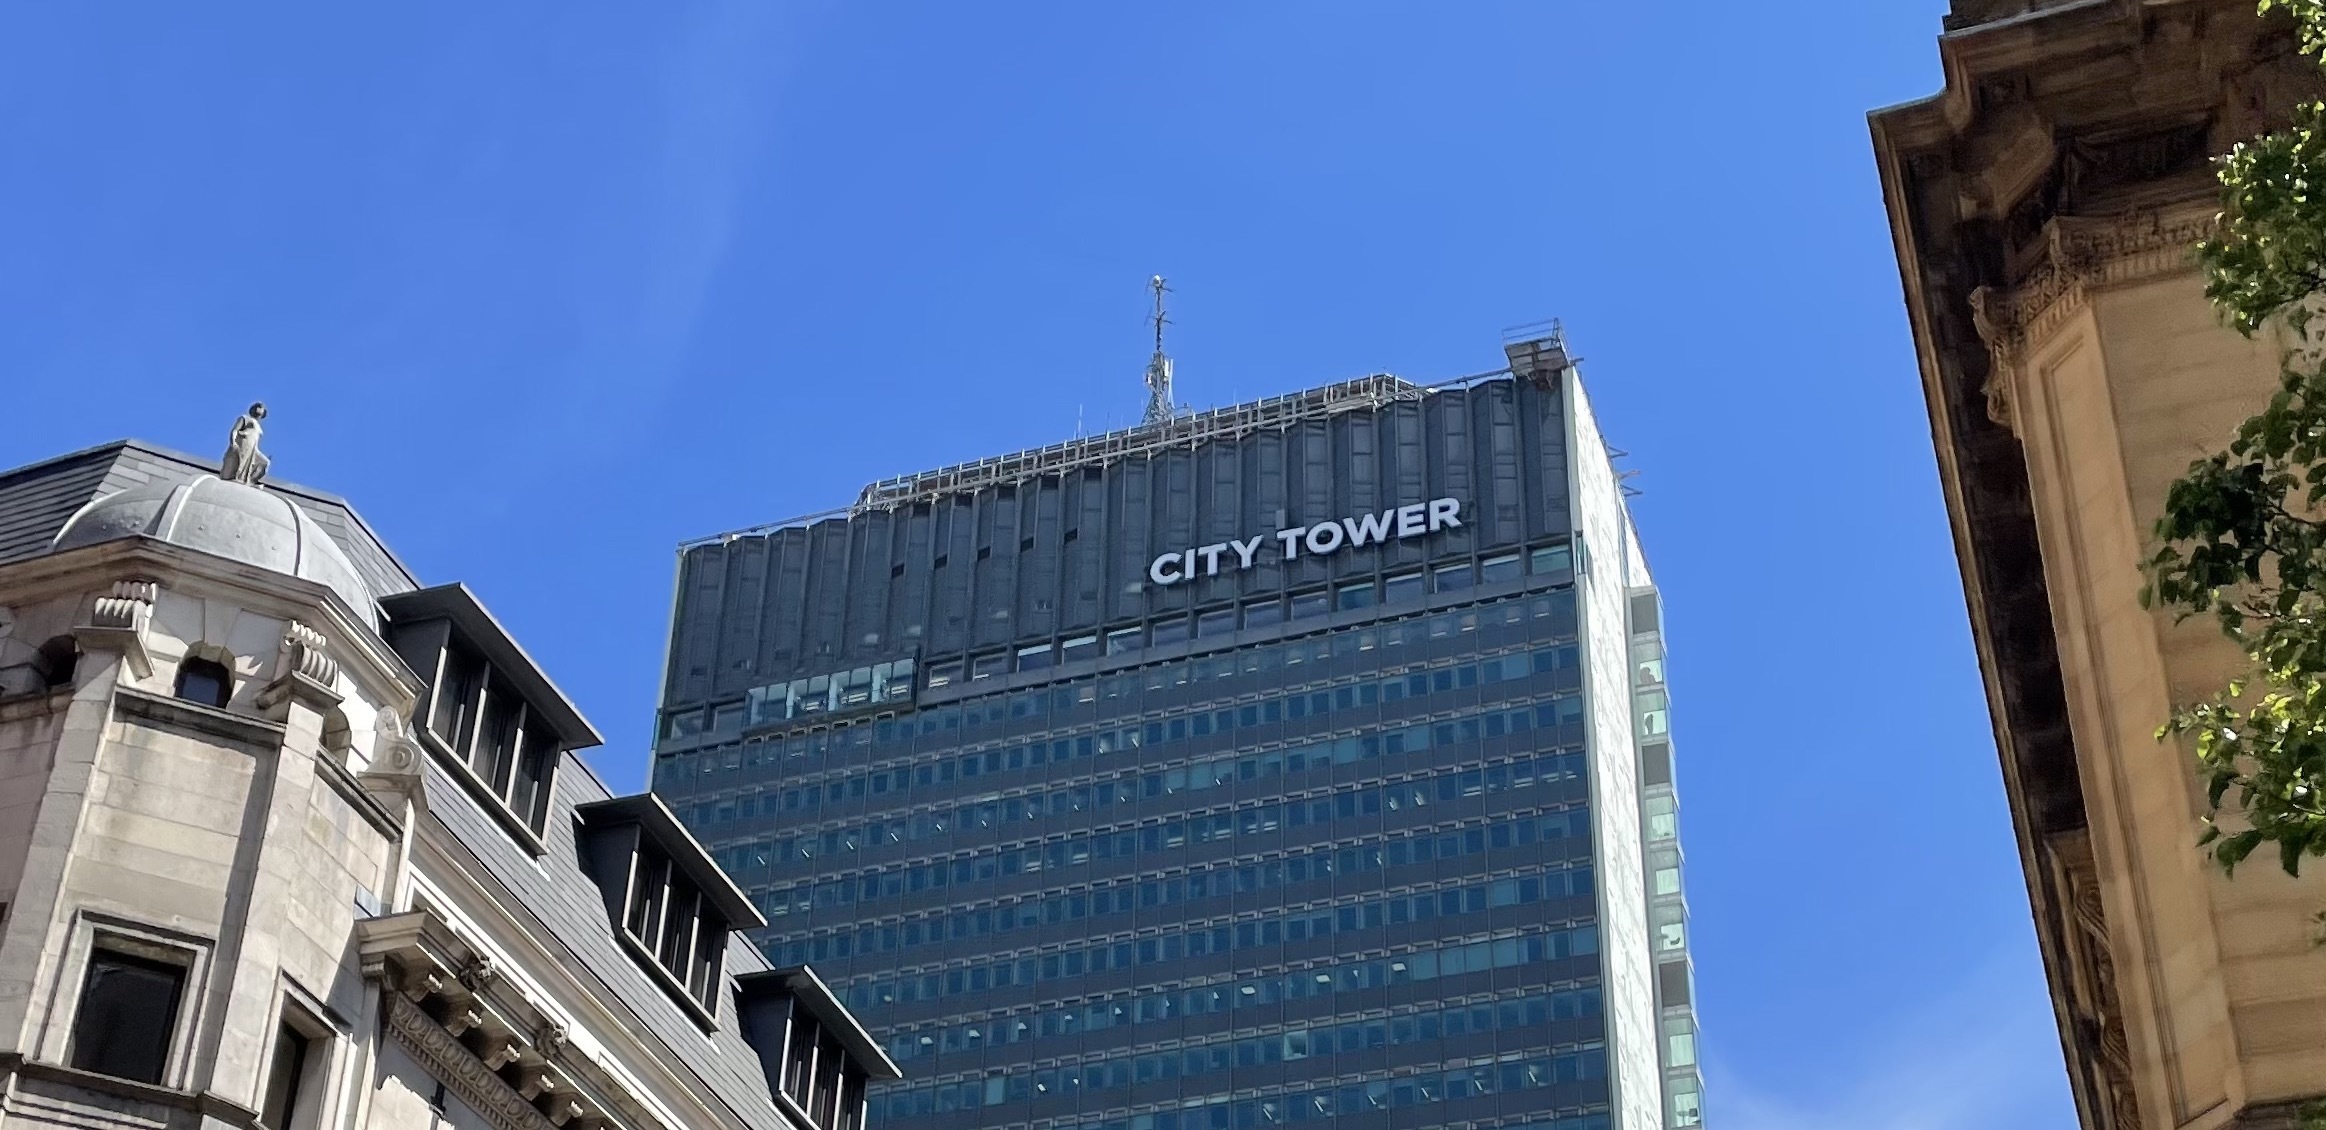 City tower